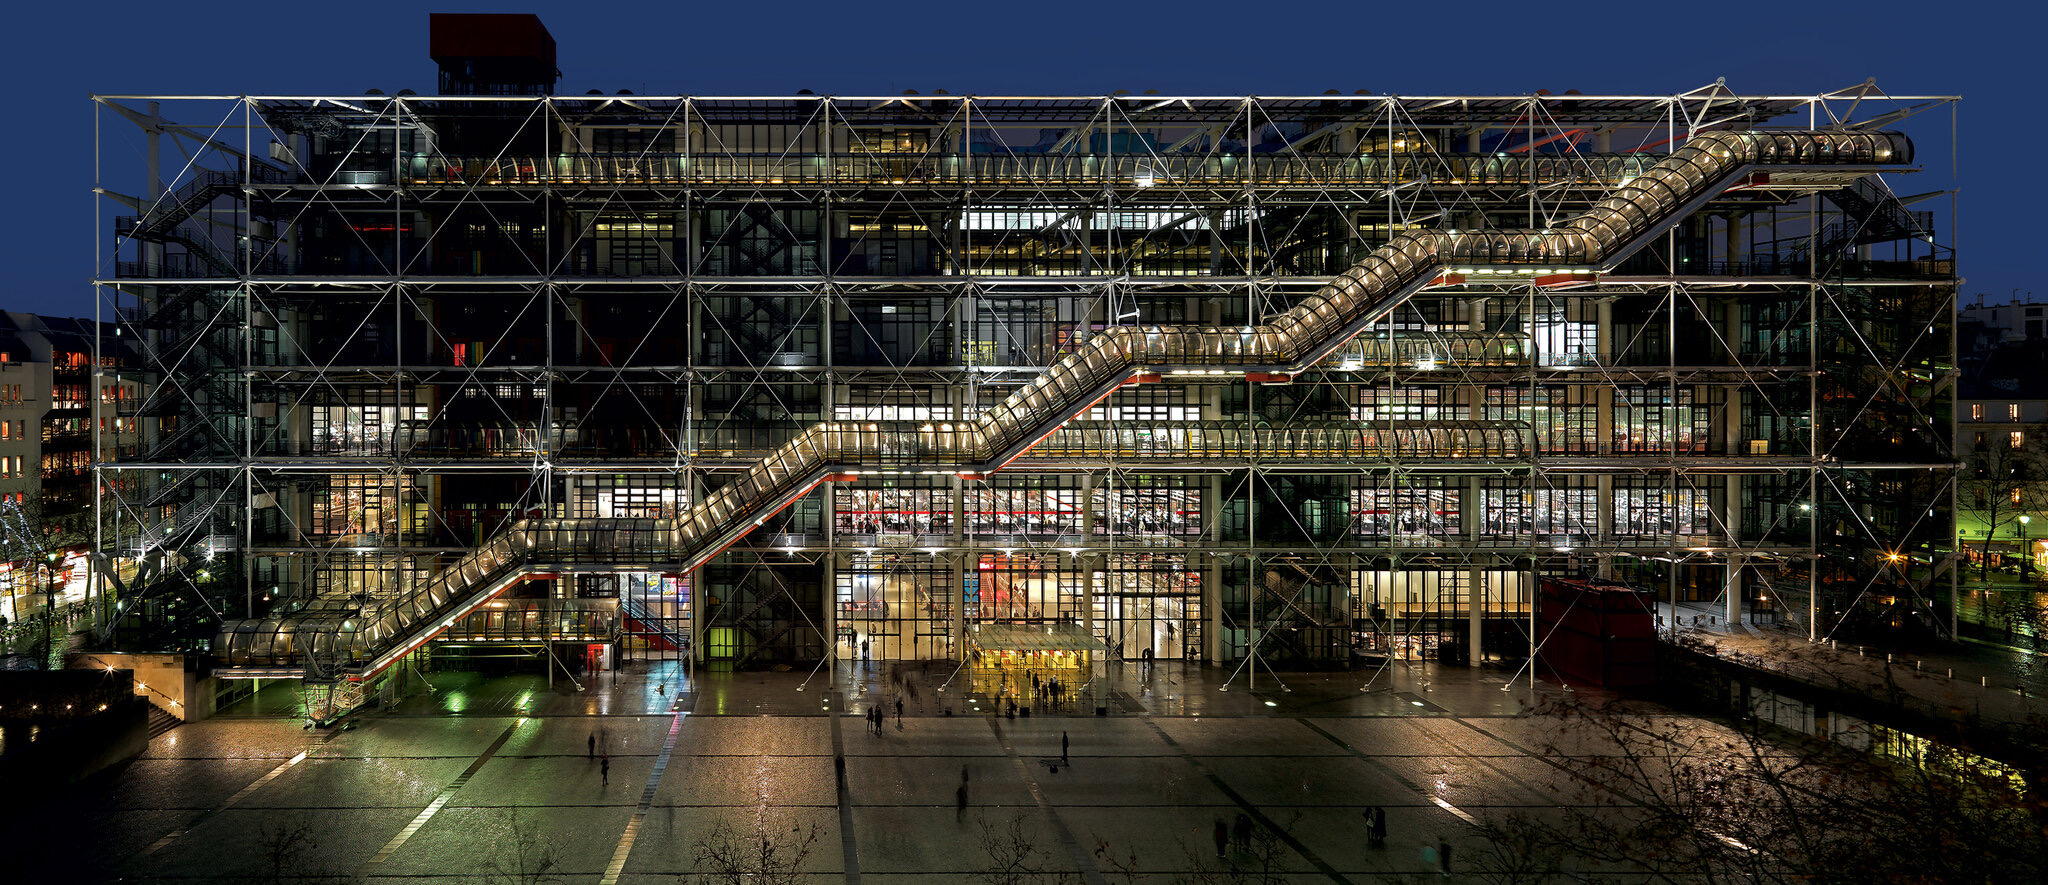 richard rogers renzo piano centro pompidou 40